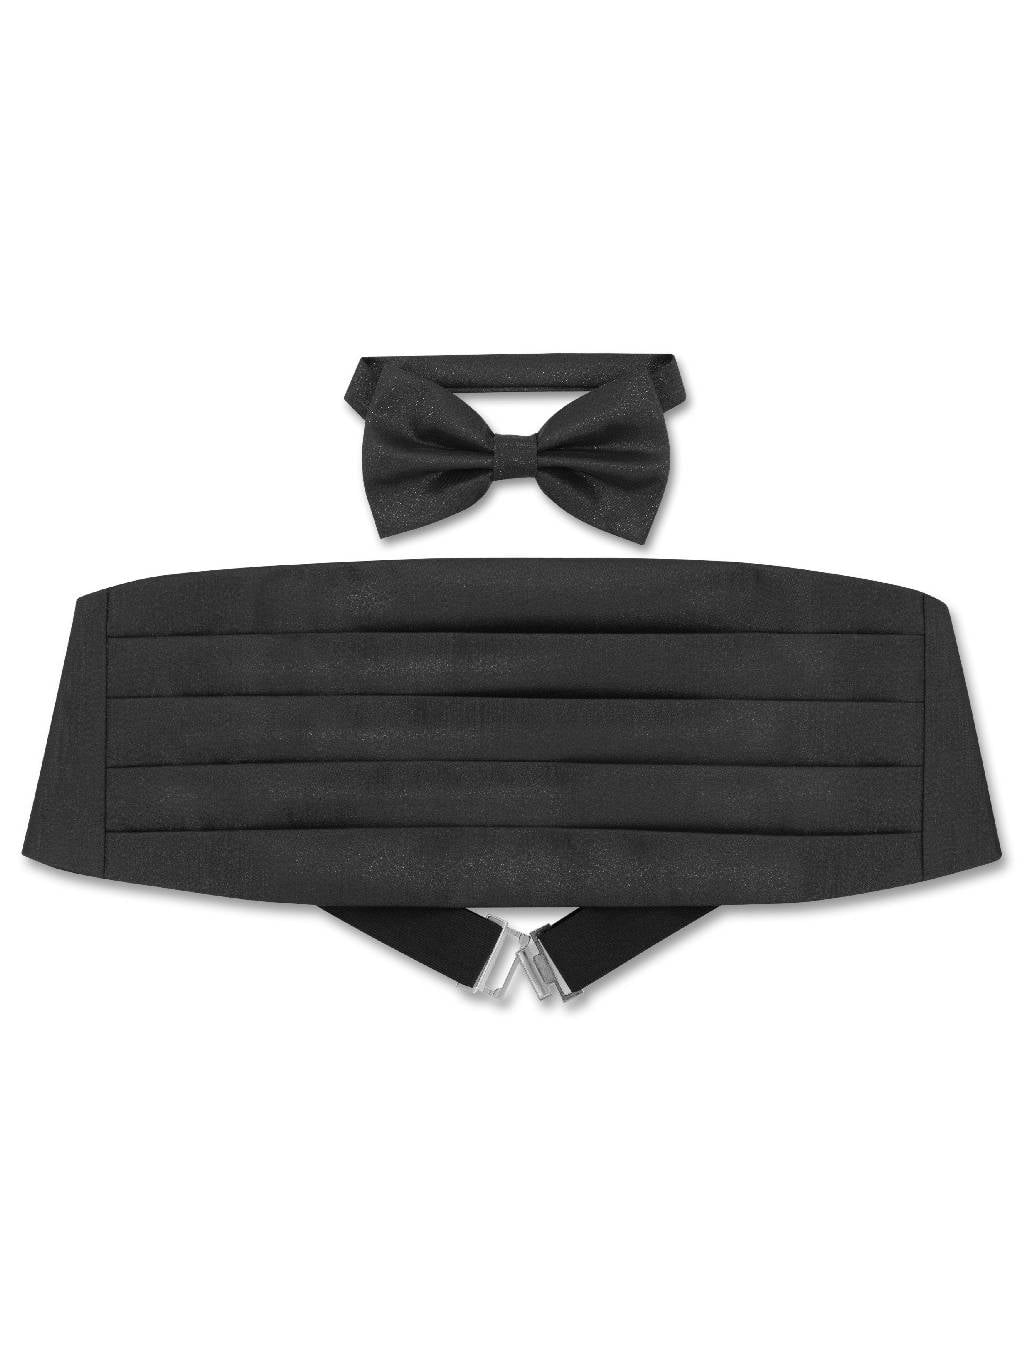 men's one size fits most Black and Blue Formal Cummerbund & Bow tie set 